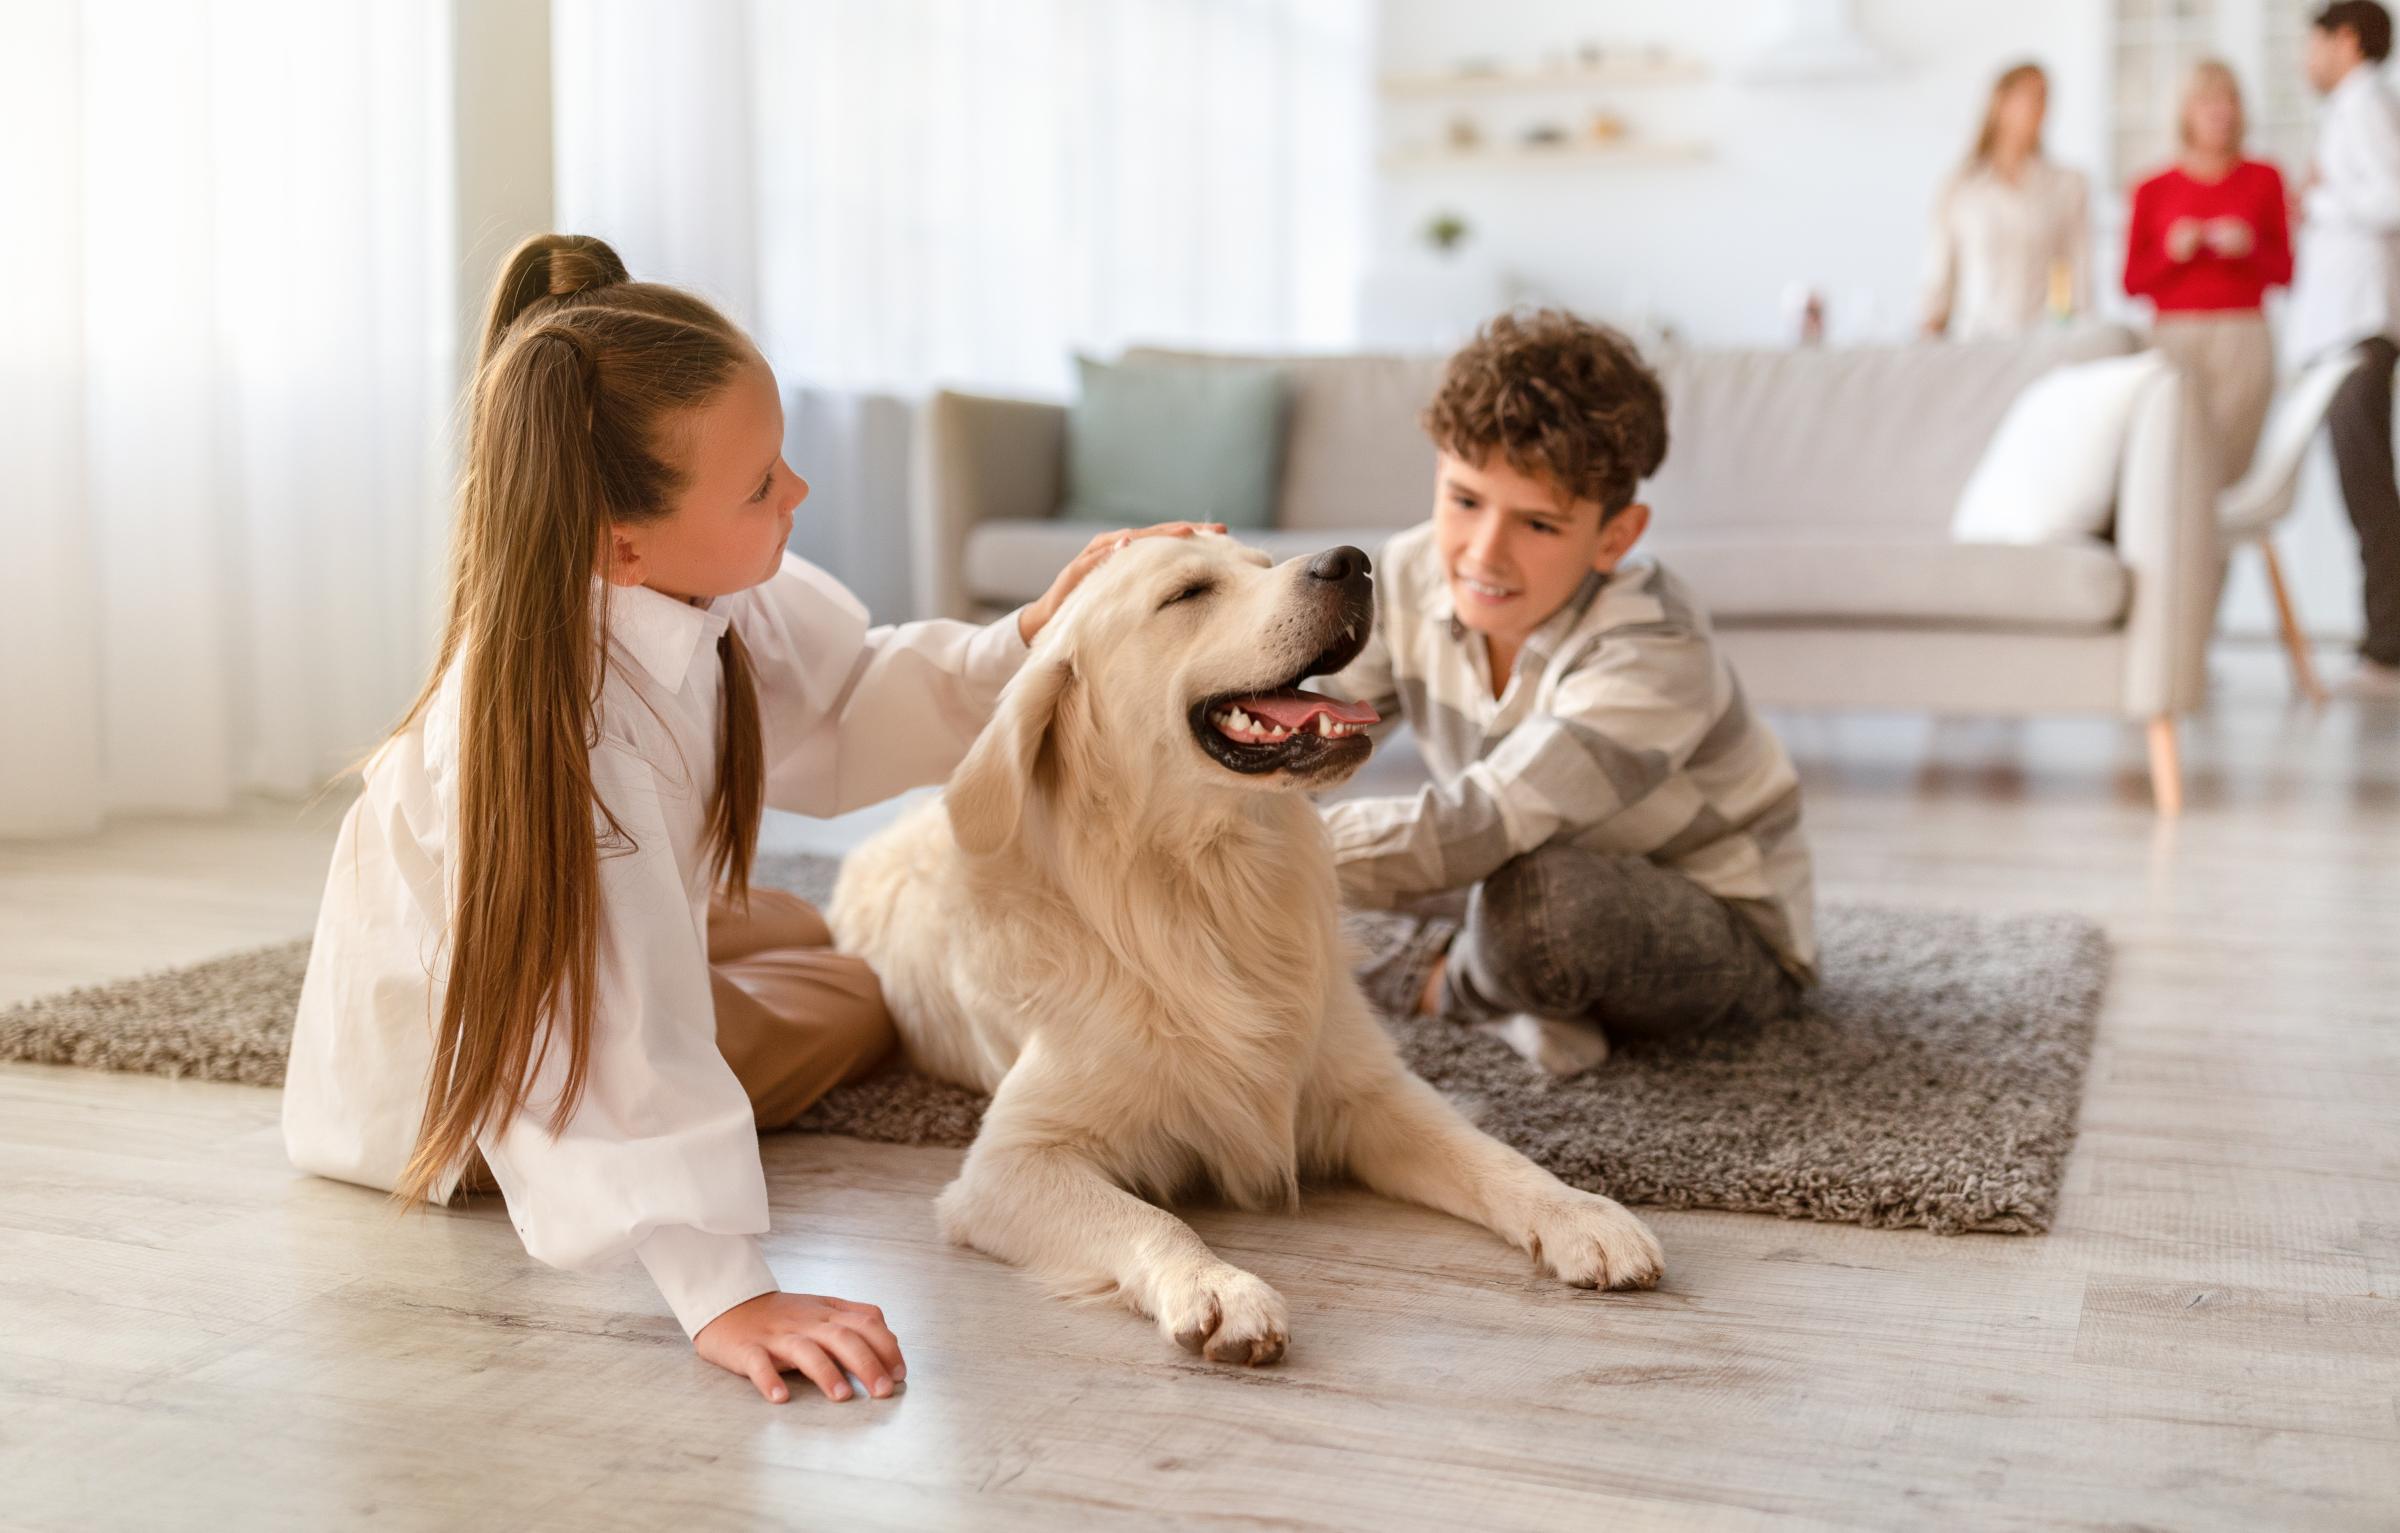 kids with dog on living room floor hassler